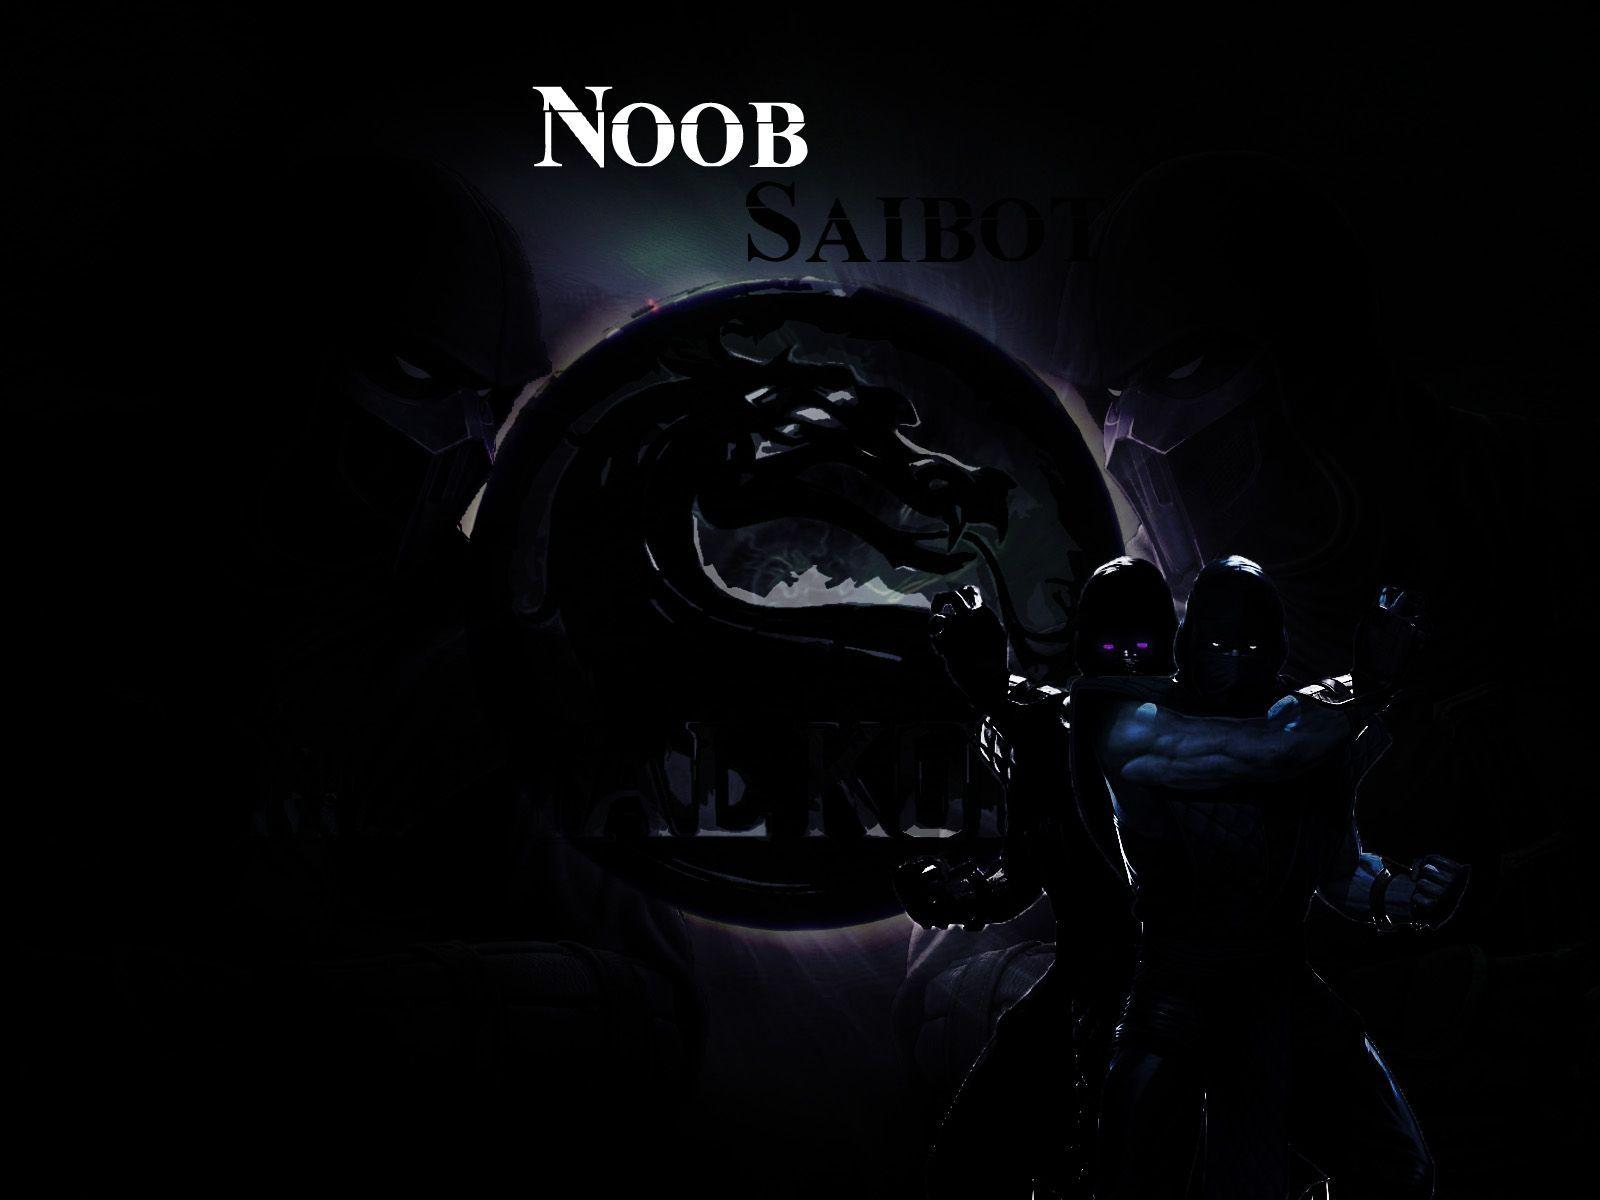 Noob Saibot. MK9 Noob Saibot Wallpaper By Reaper The Creeper